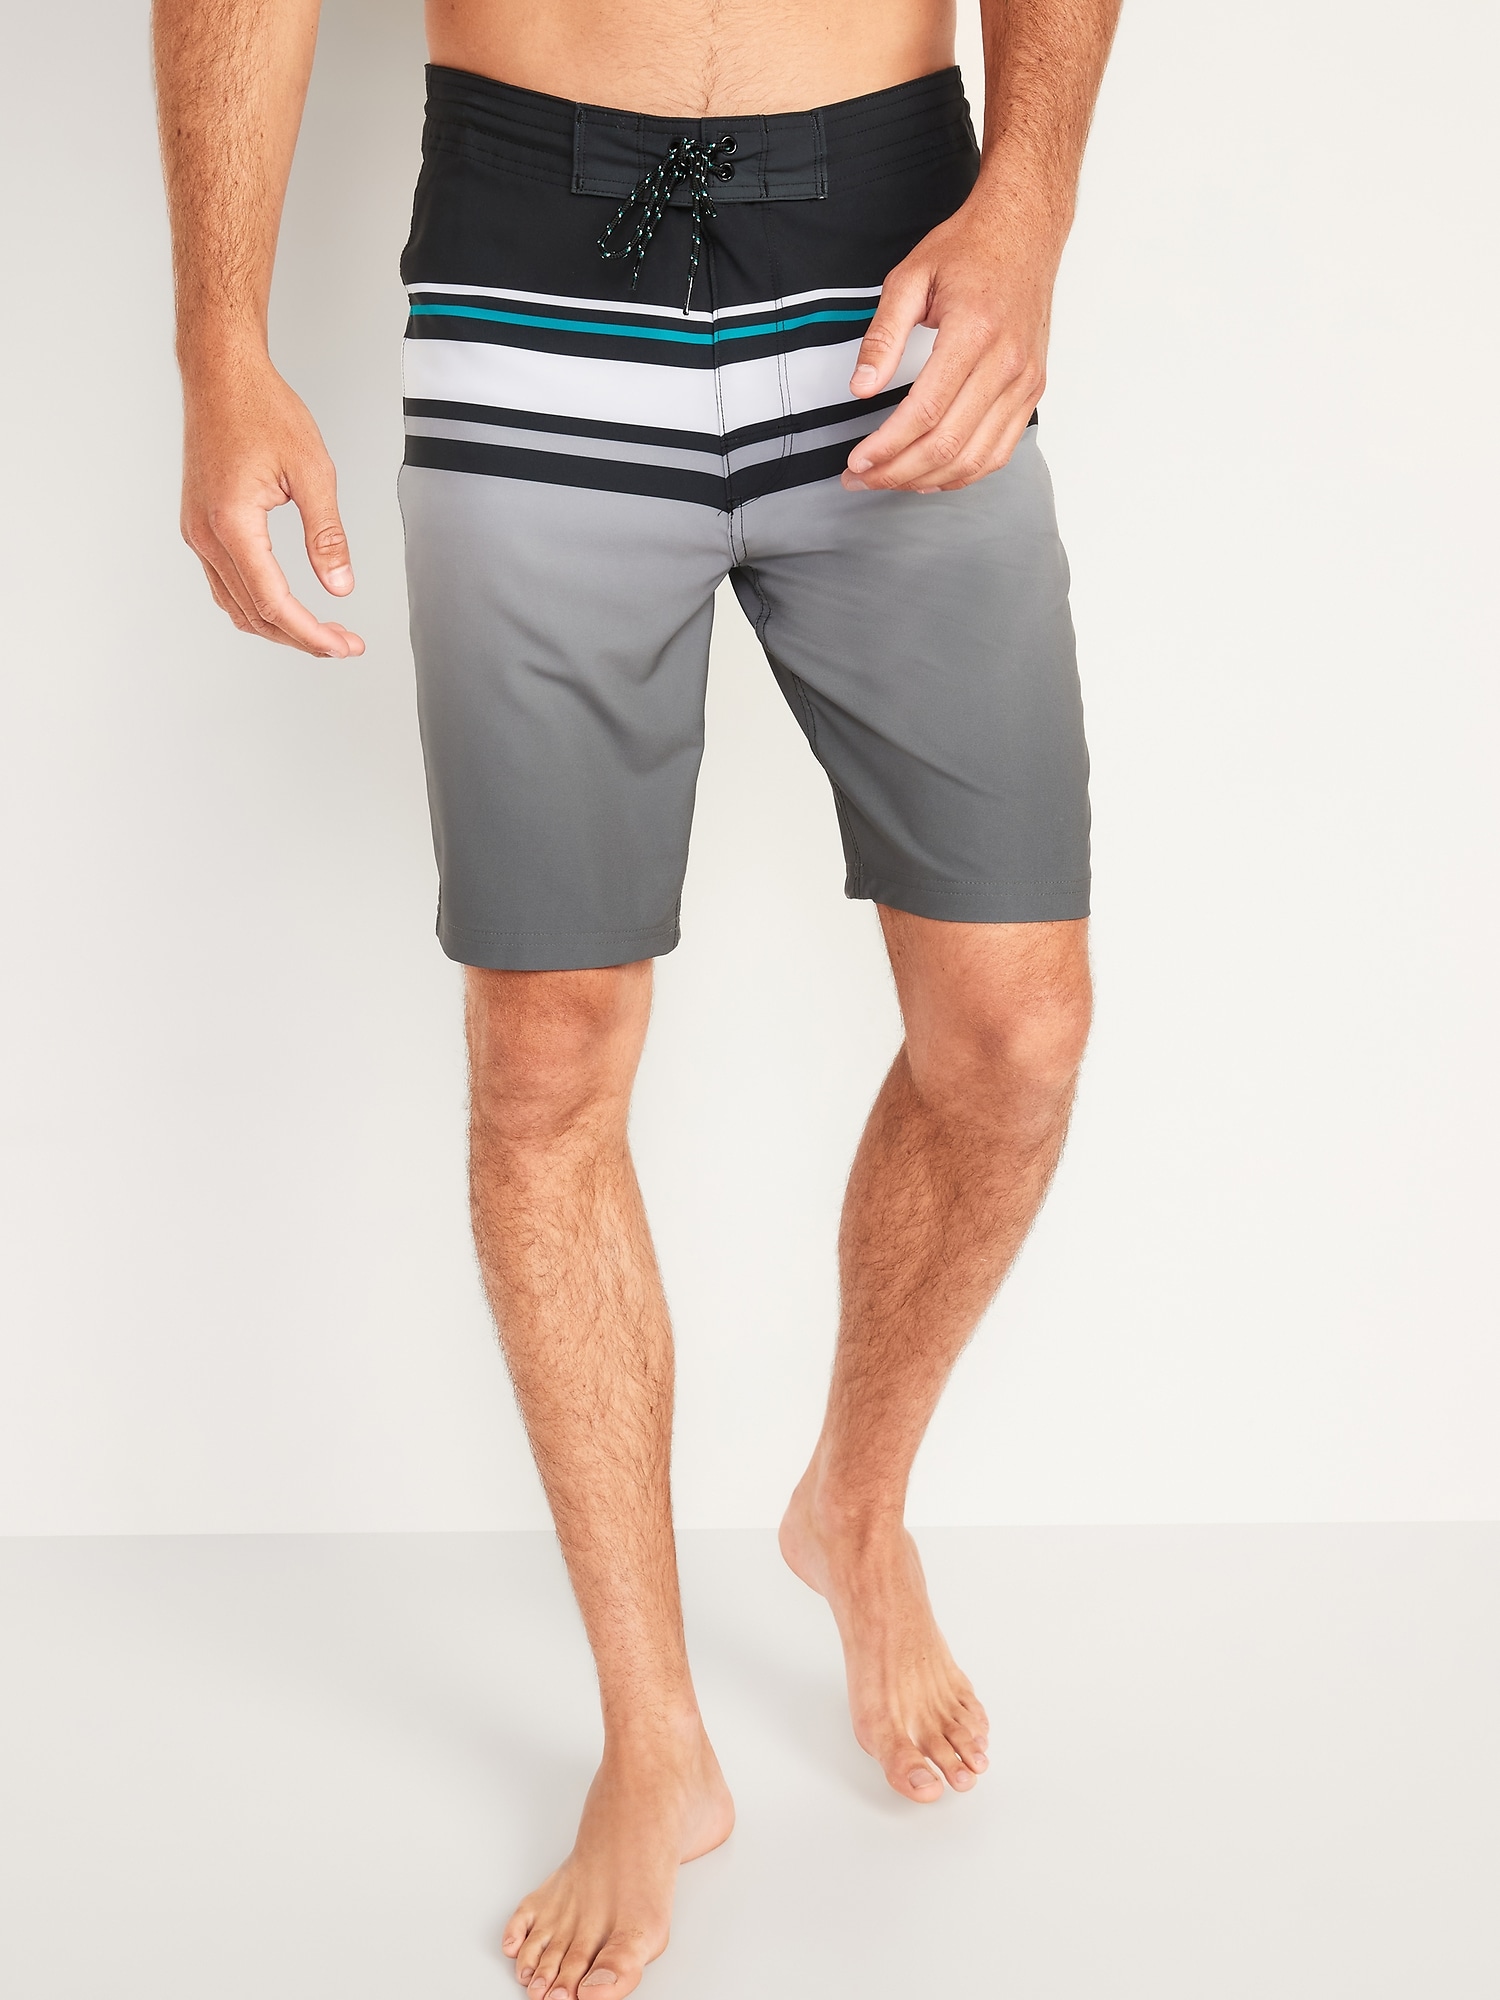 Striped Built-In Flex Board Shorts -- 10-inch inseam